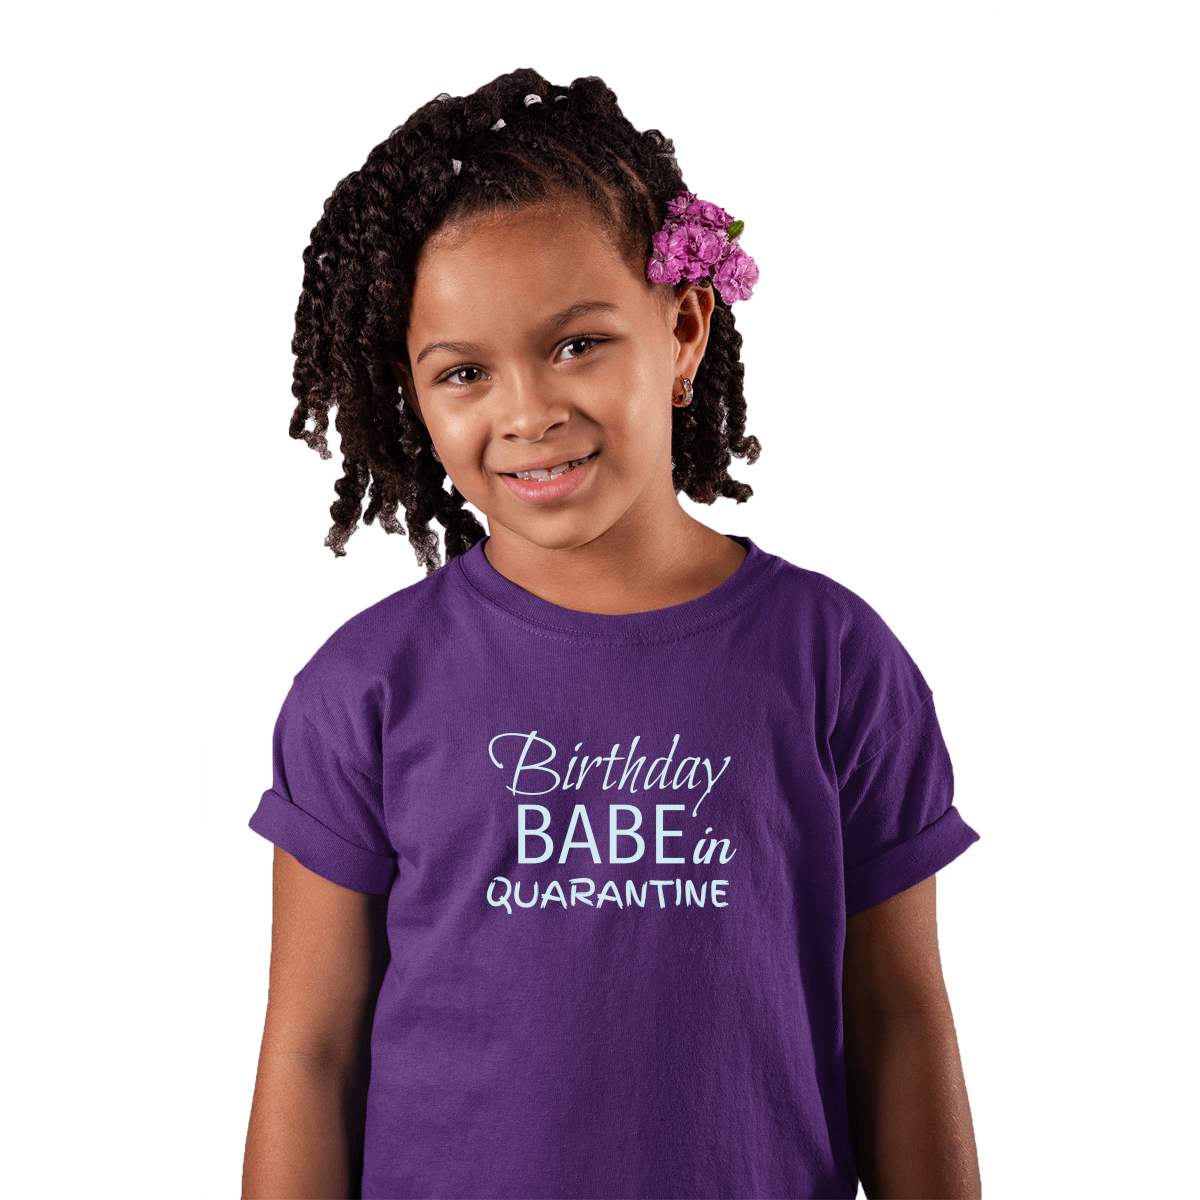 Birthday Babe in Quarantine Kids T-shirt | Purple